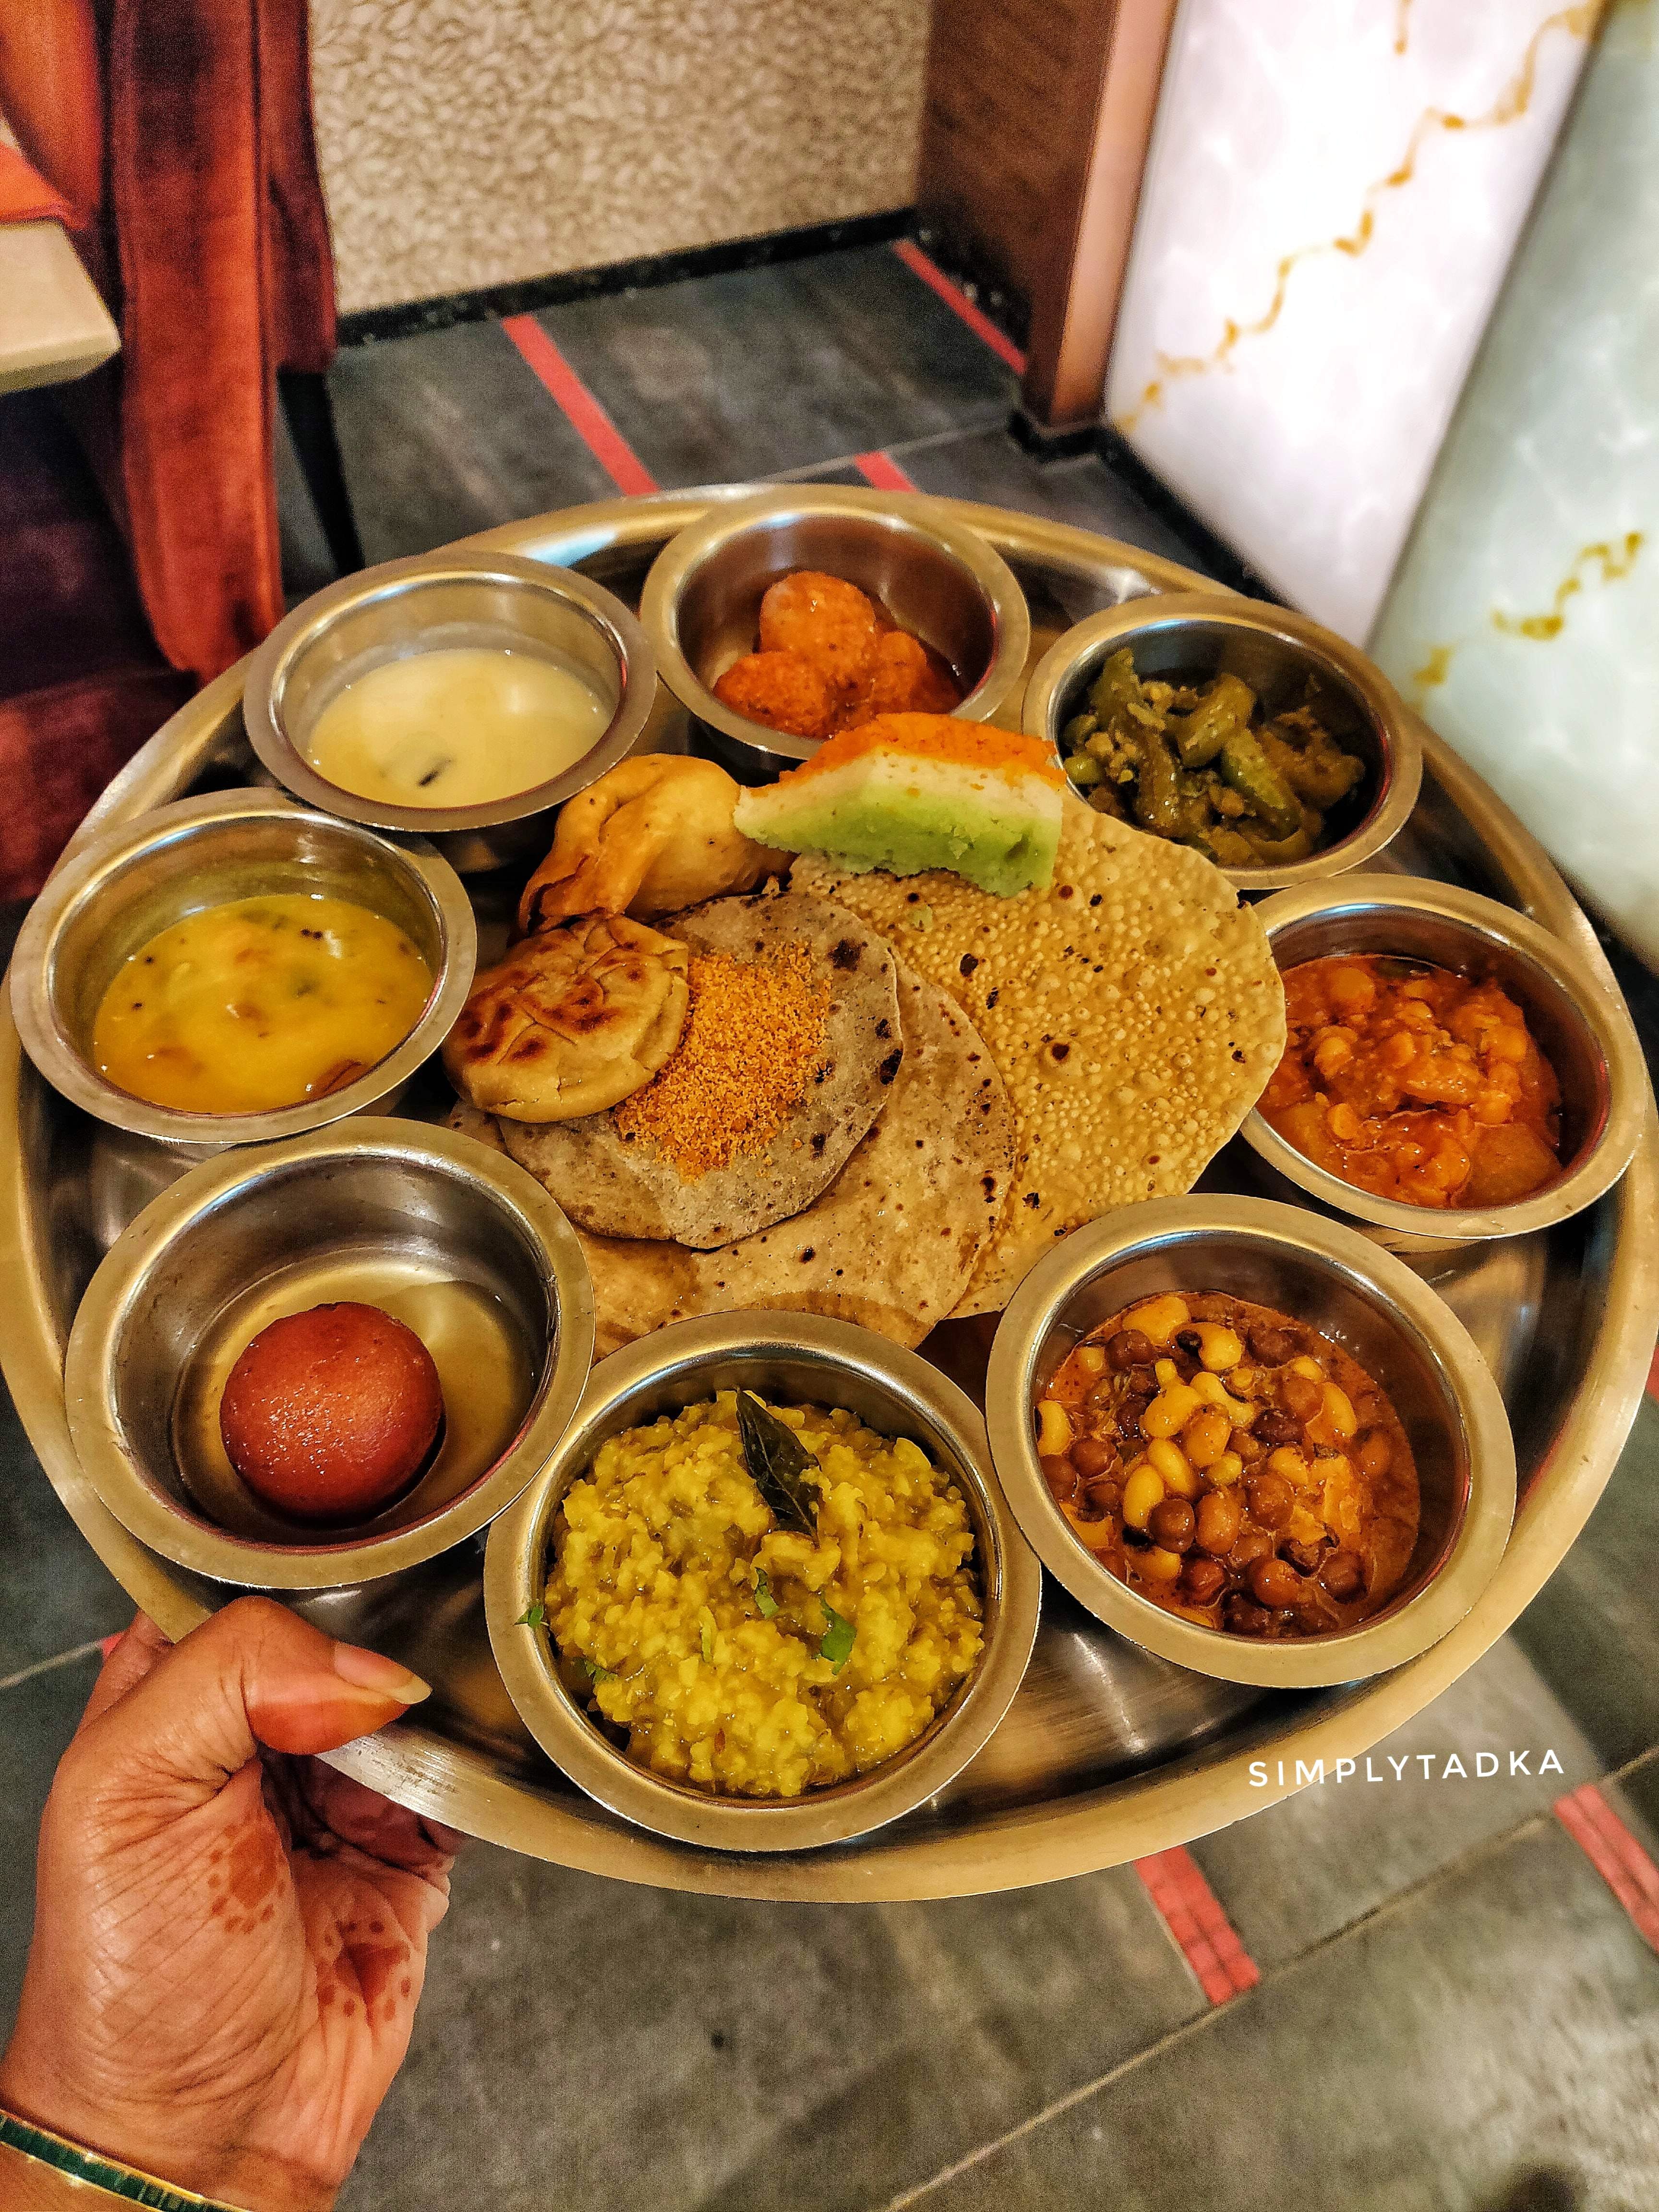 Dish,Food,Cuisine,Meal,Ingredient,Produce,Indian cuisine,Vegetarian food,Recipe,Lunch